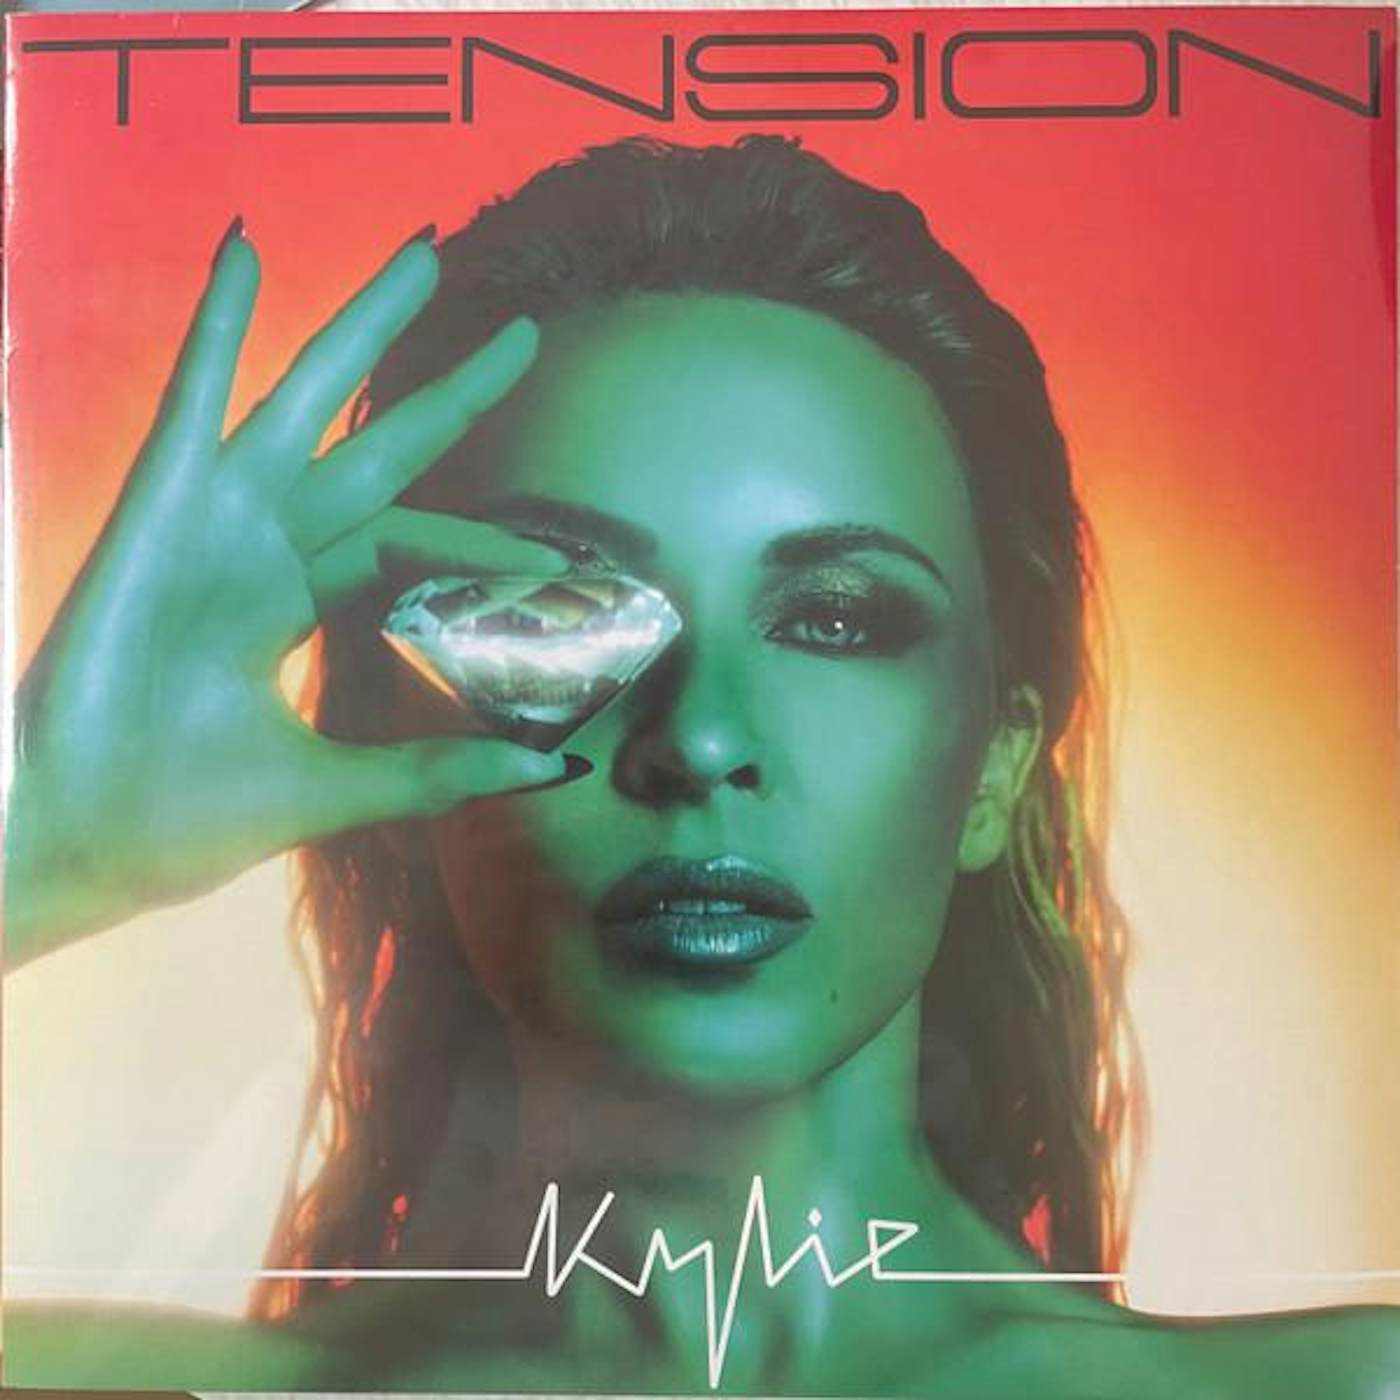 Kylie Minogue TENSION Vinyl Record